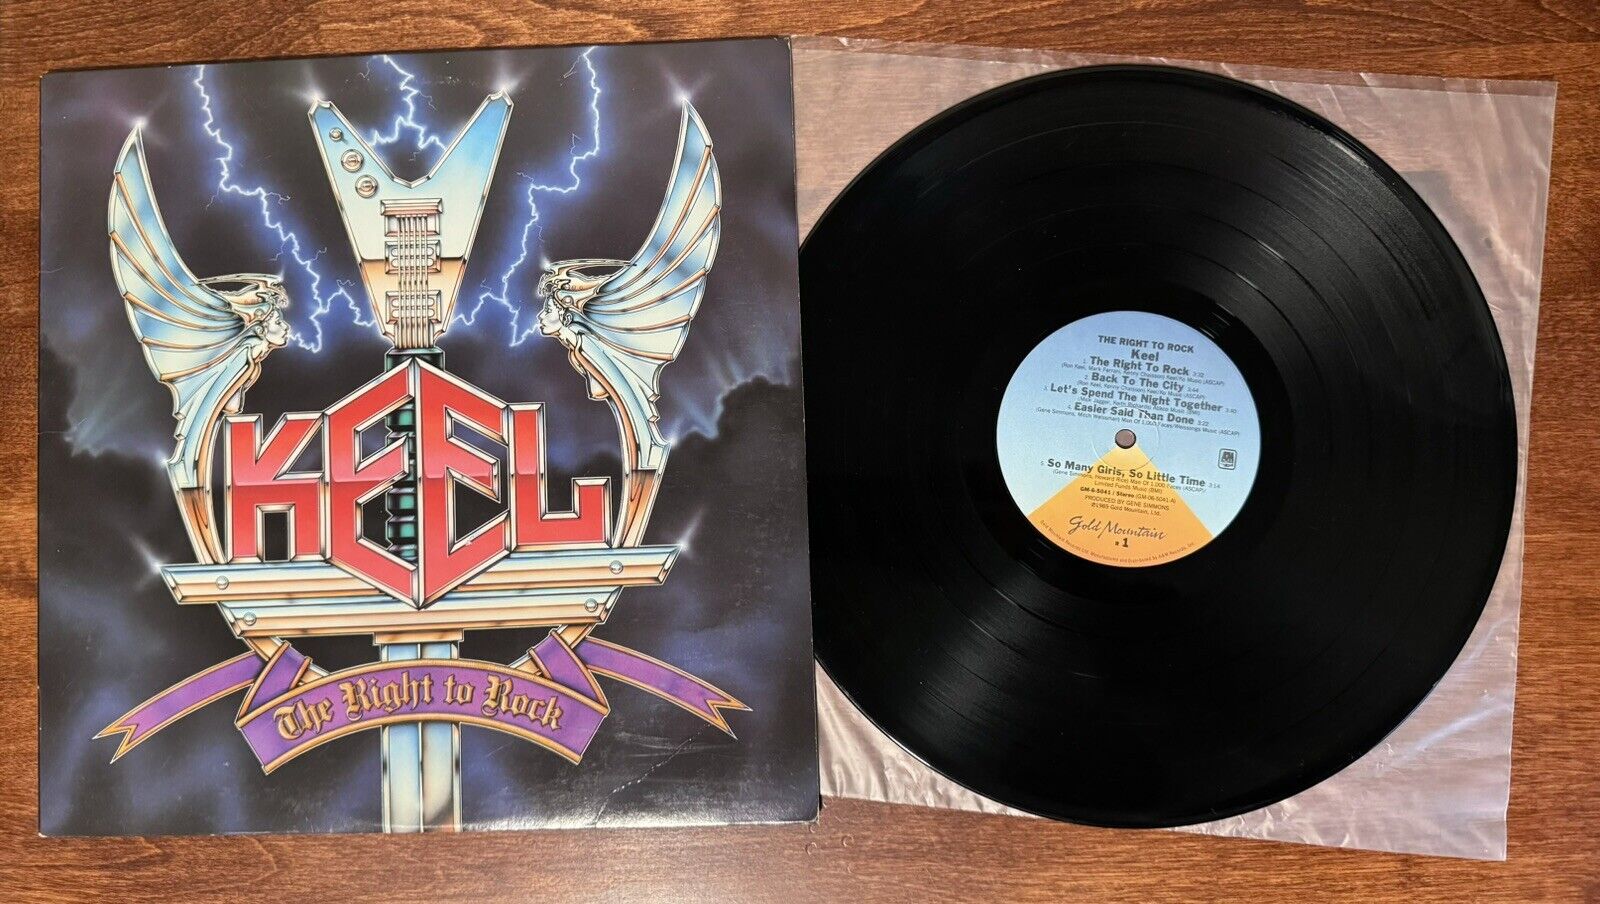 Keel - The Right to Rock - Vinyl LP - 1985 Original Pressing